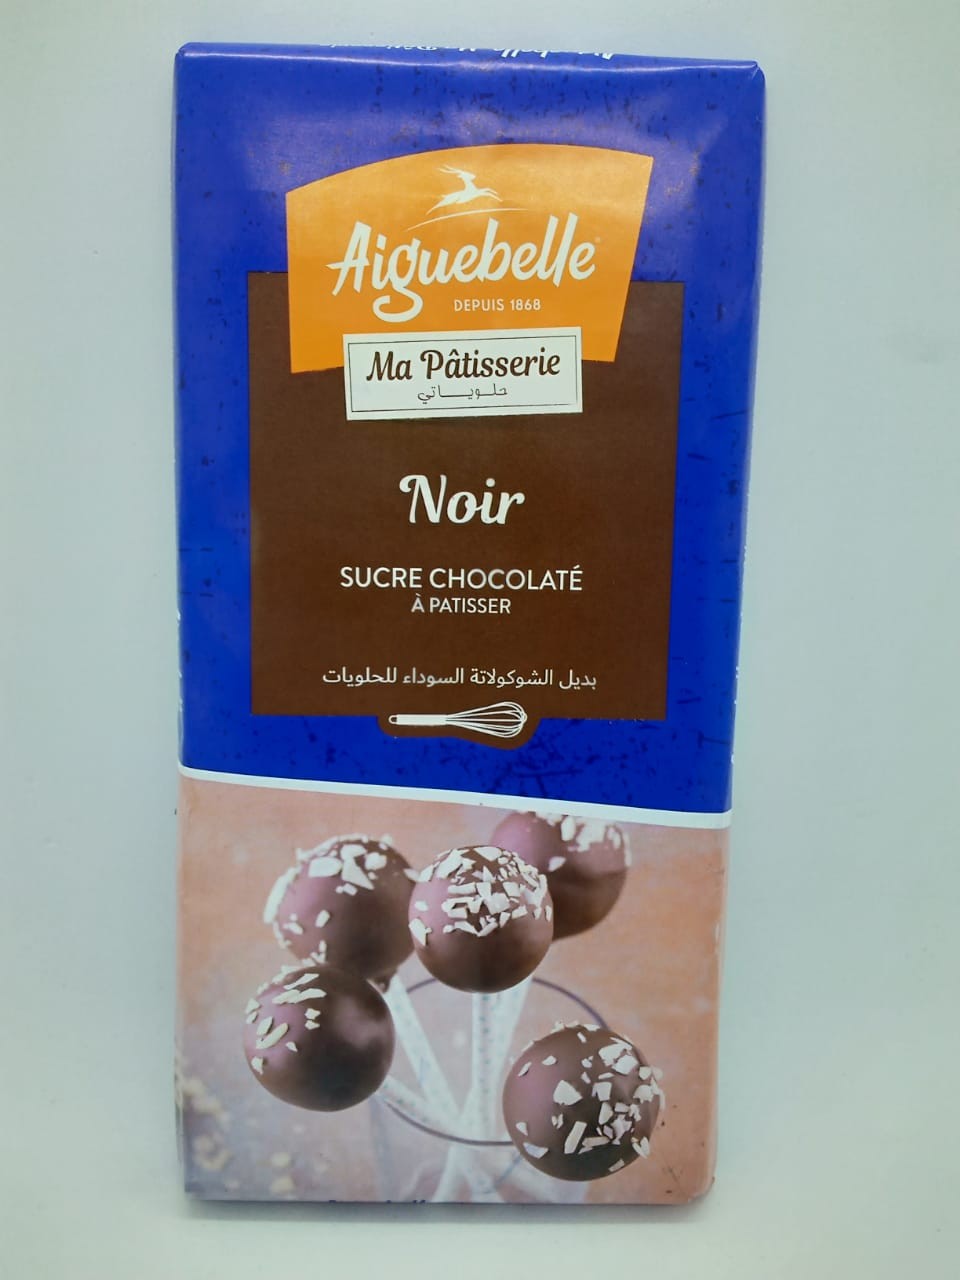 Dark Chocolate Ma Patisserie Aiguebelle 175g